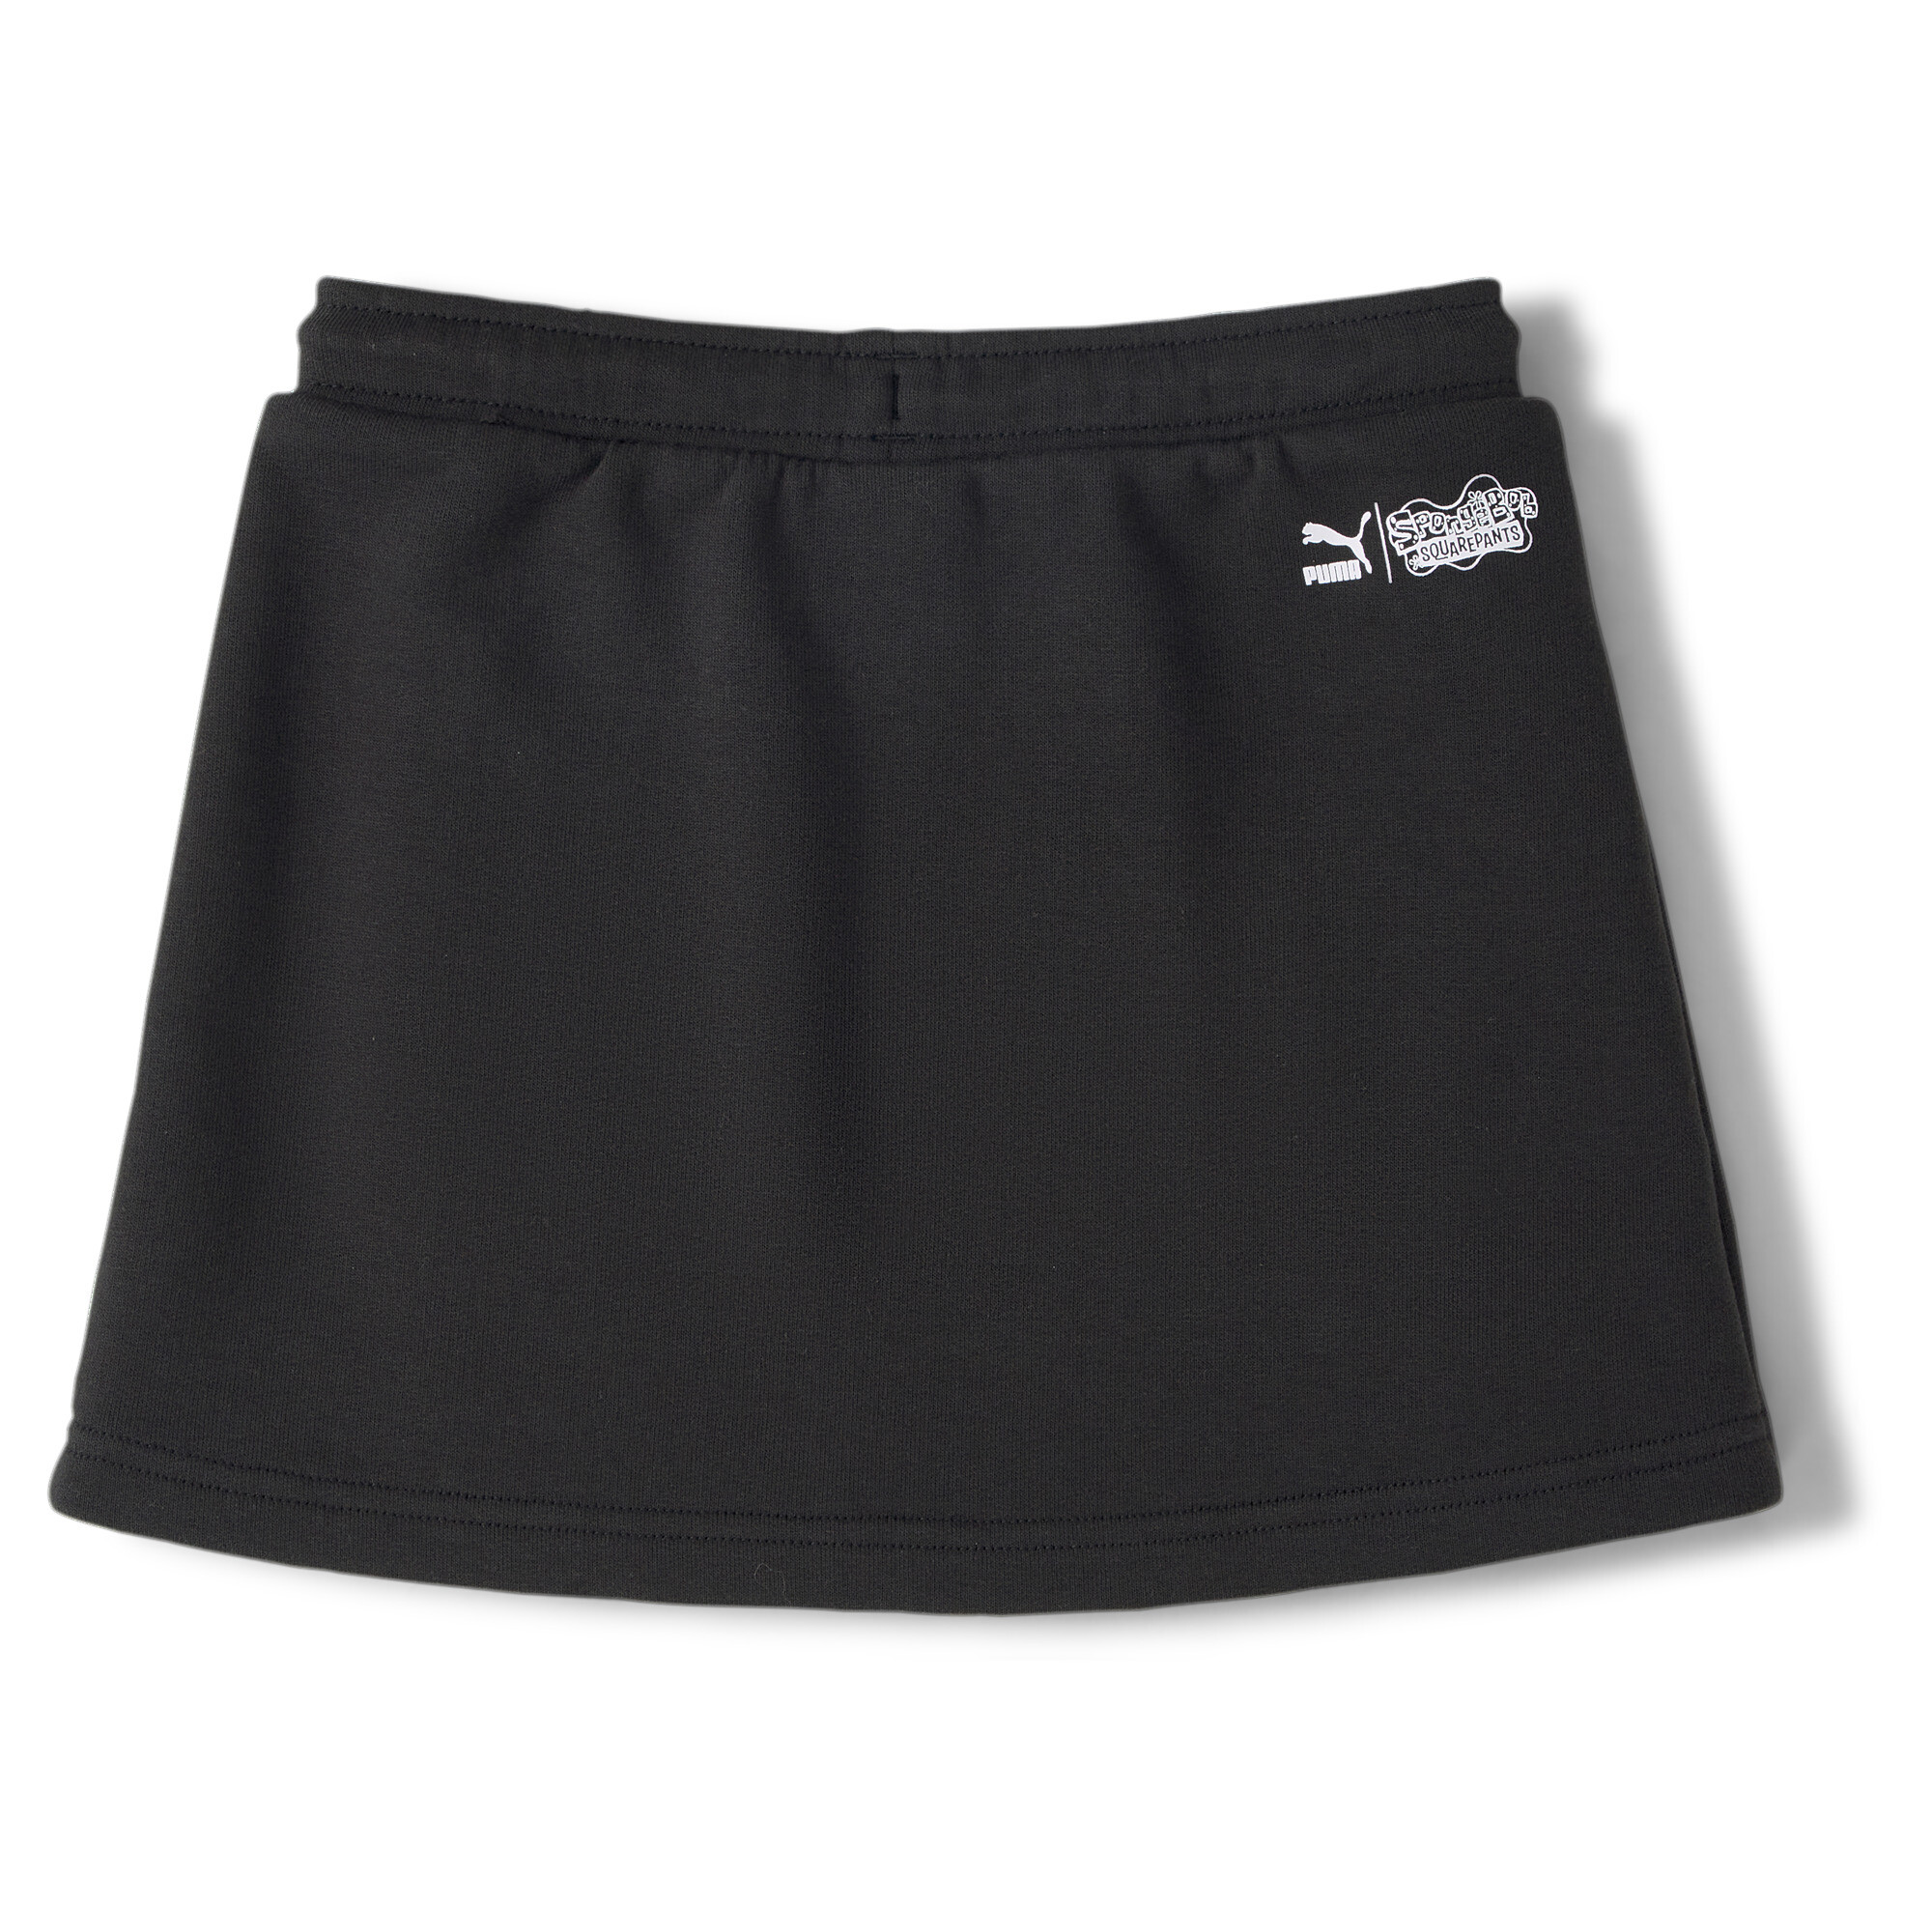 PUMA X SPONGEBOB Skirt Kids In Black, Size 1-2 Youth